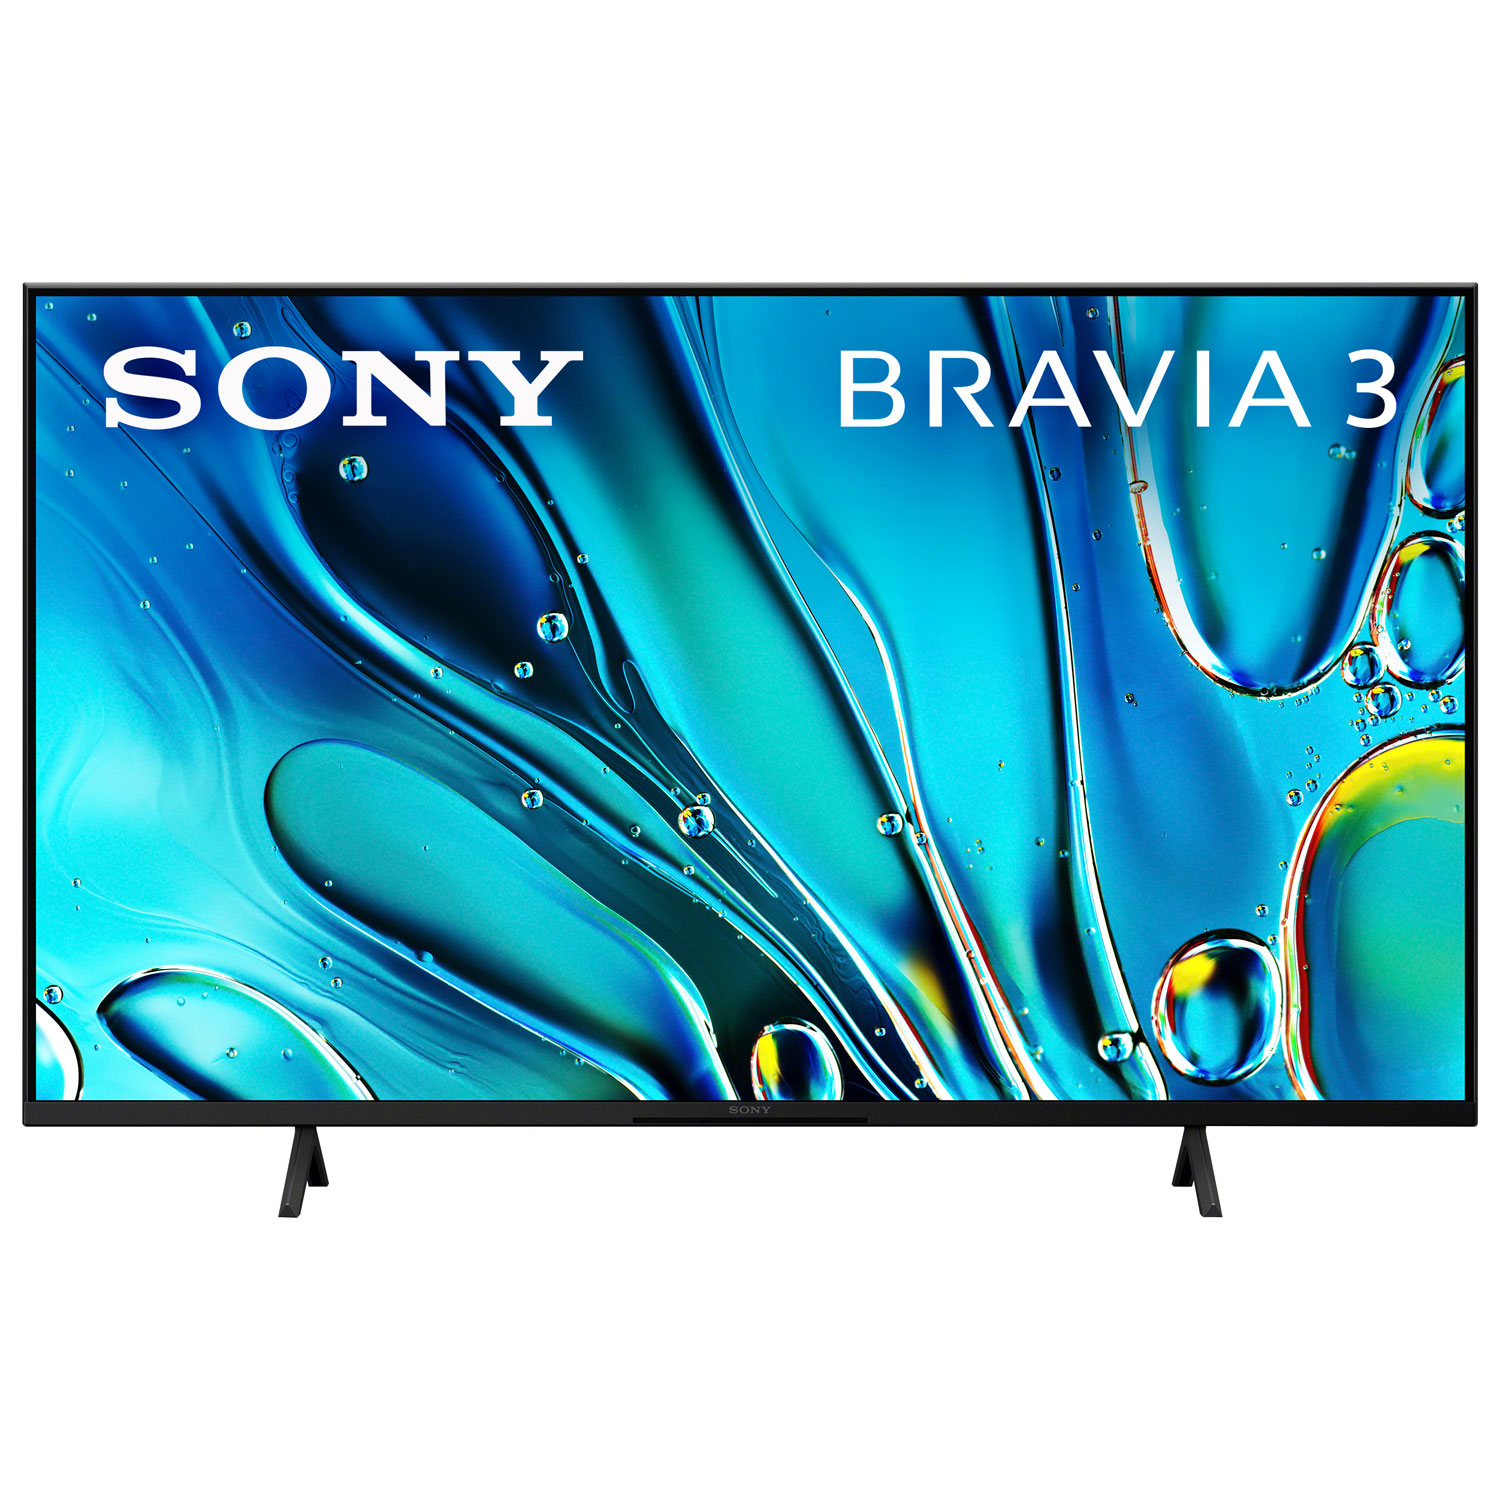 Sony Bravia 3 43" 4K UHD HDR LED Smart Google TV (K43S30B) - 2024